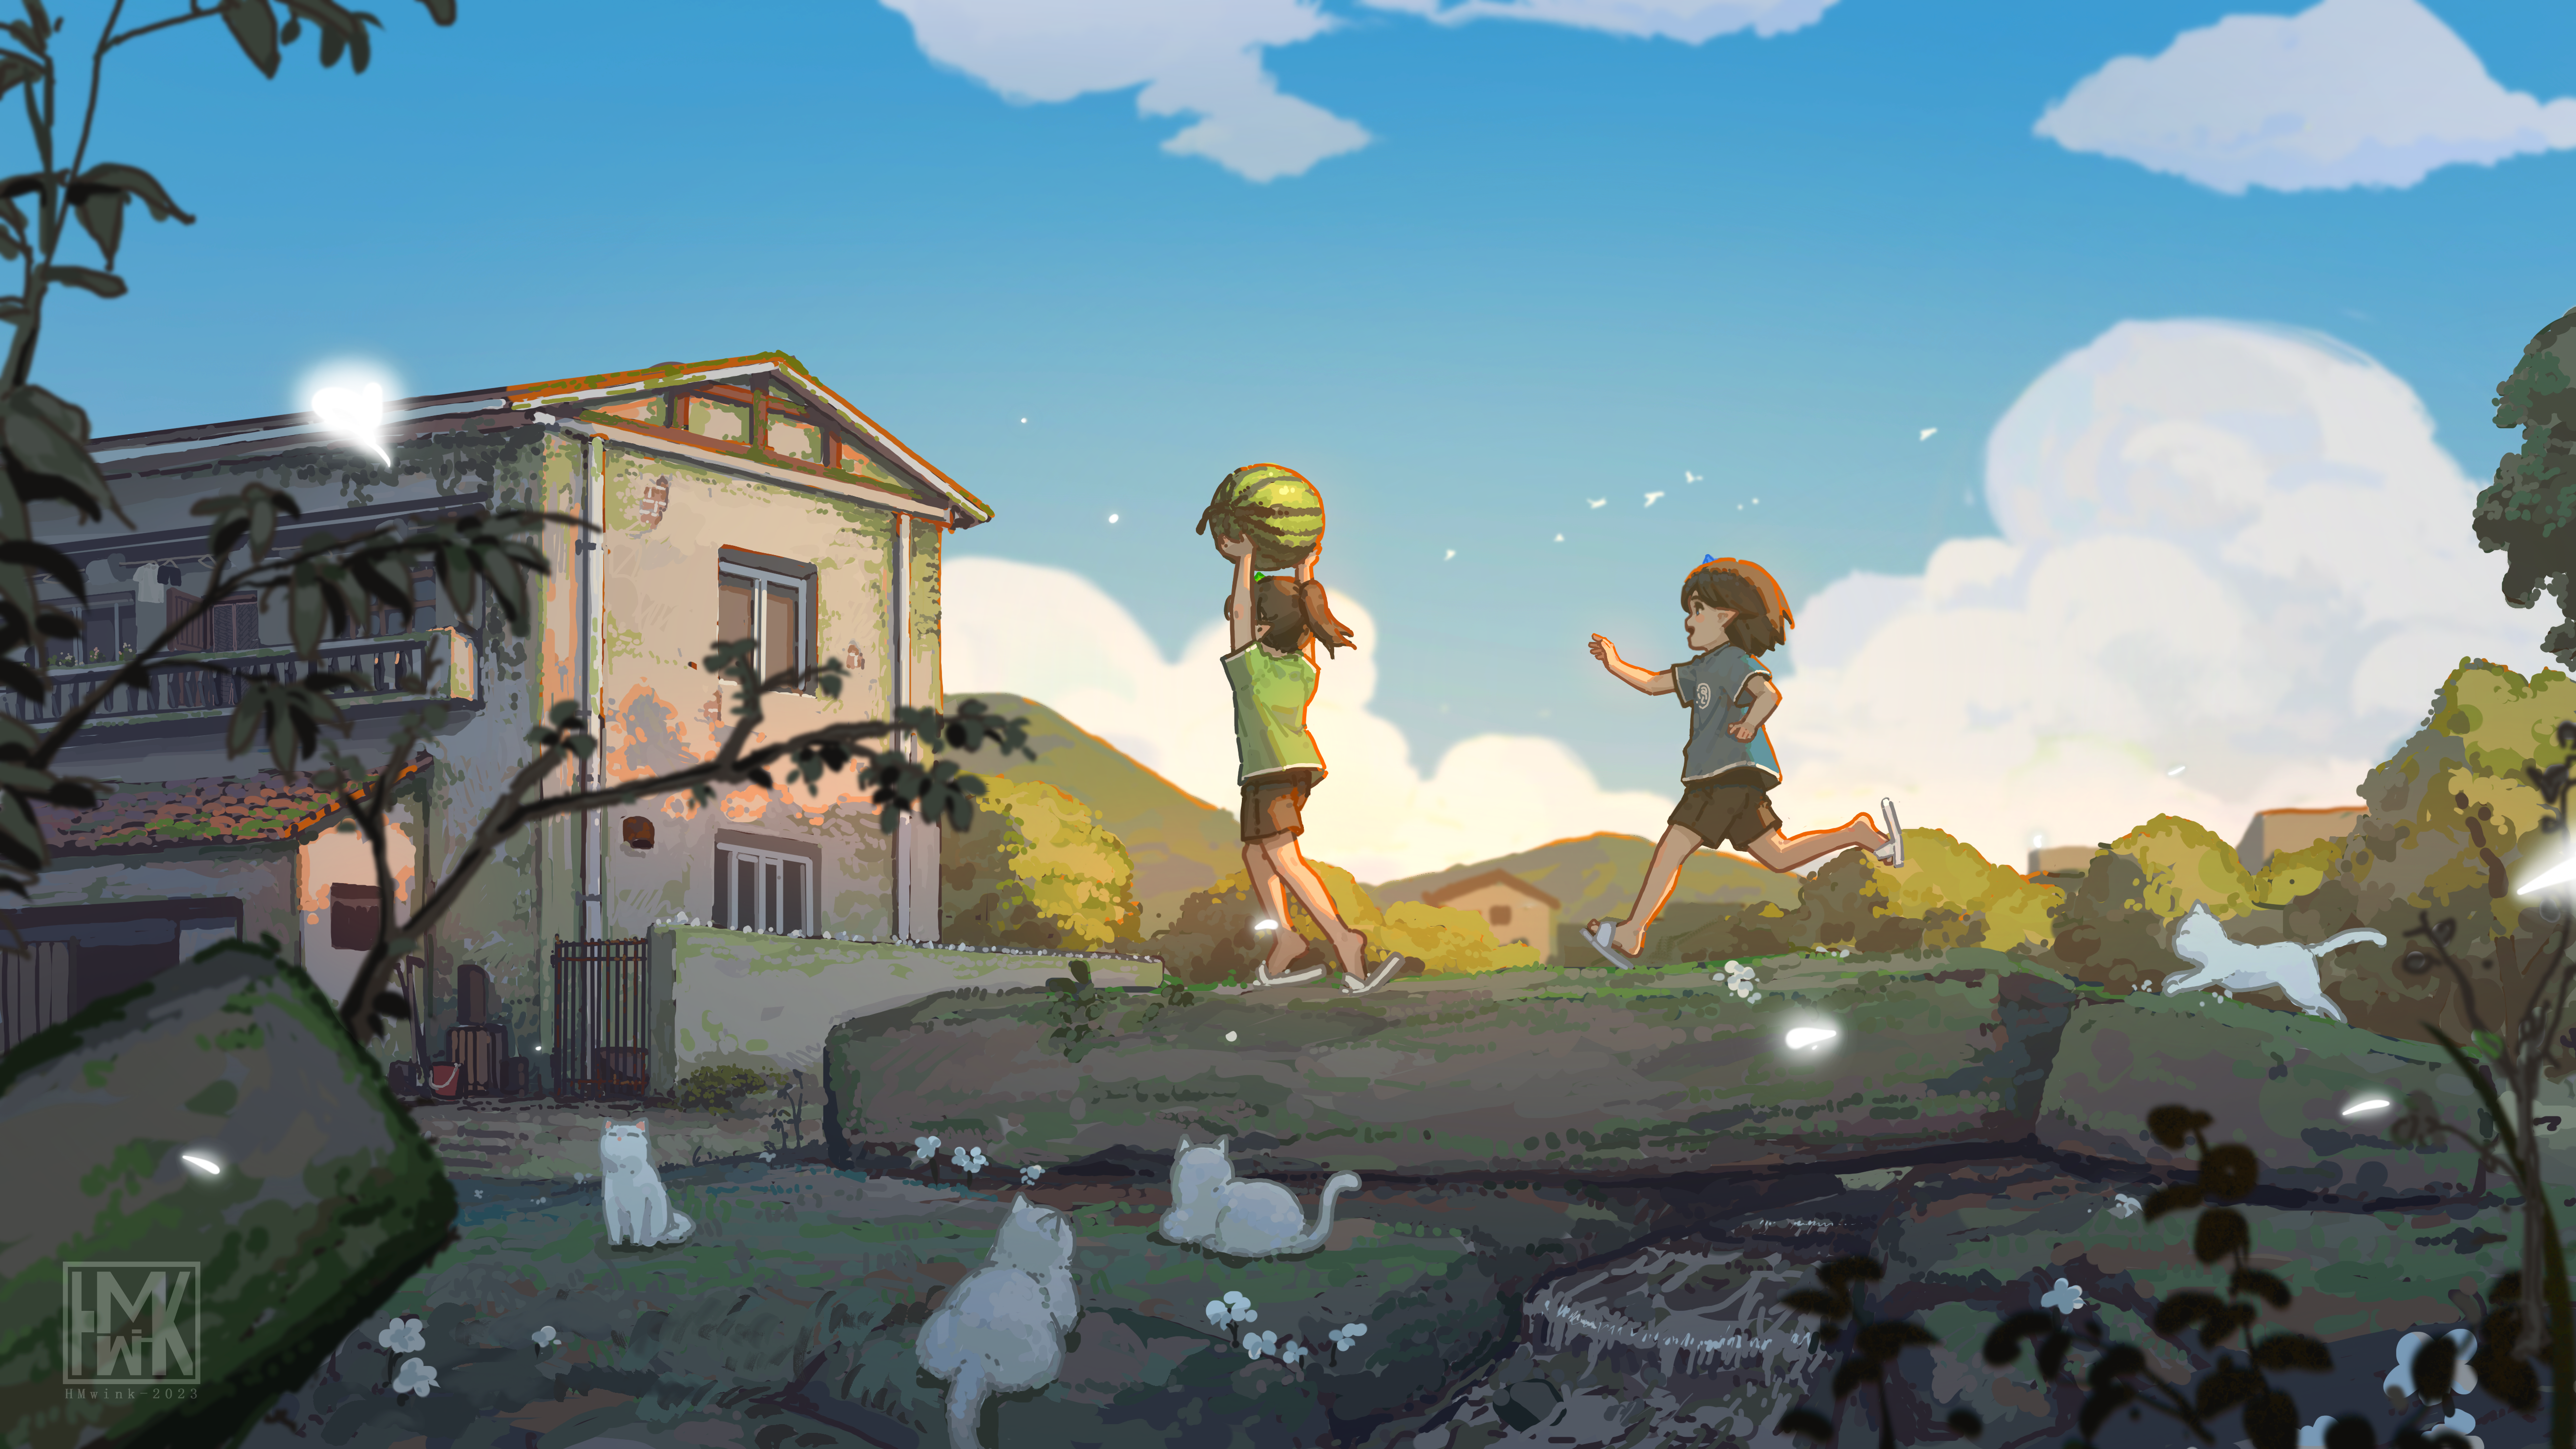 Hua Ming Wink Anime Girls Digital Art Artwork Watermelons Sky Clouds Running Cats Animals Branch Lea 5275x2968